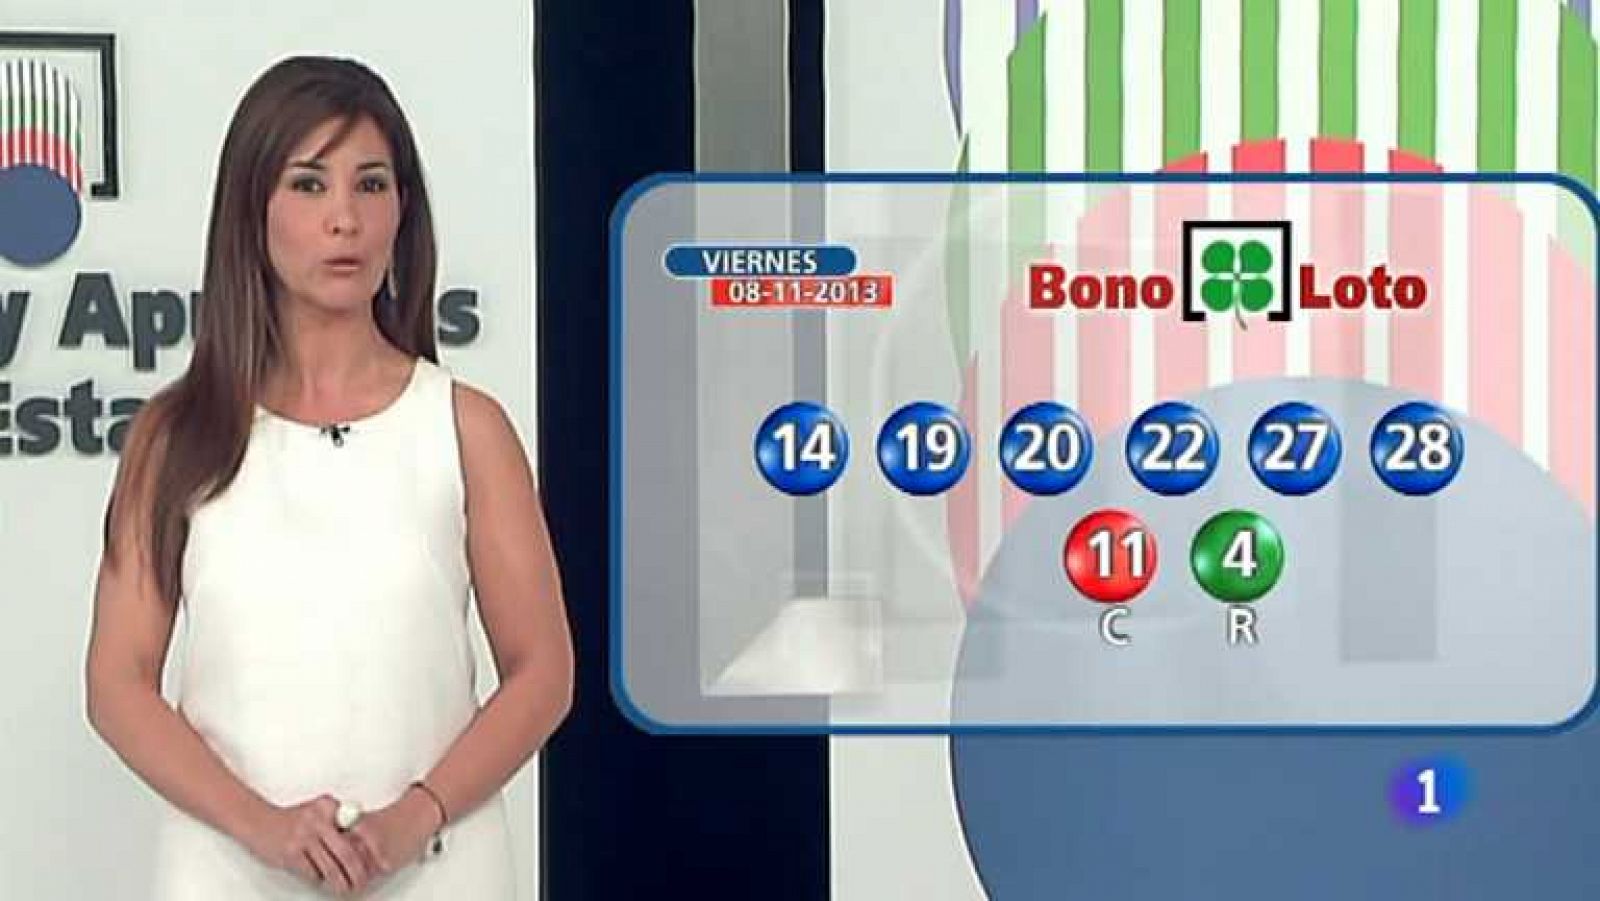 Loterías: Bonoloto + Euromillones - 08/11/13 | RTVE Play